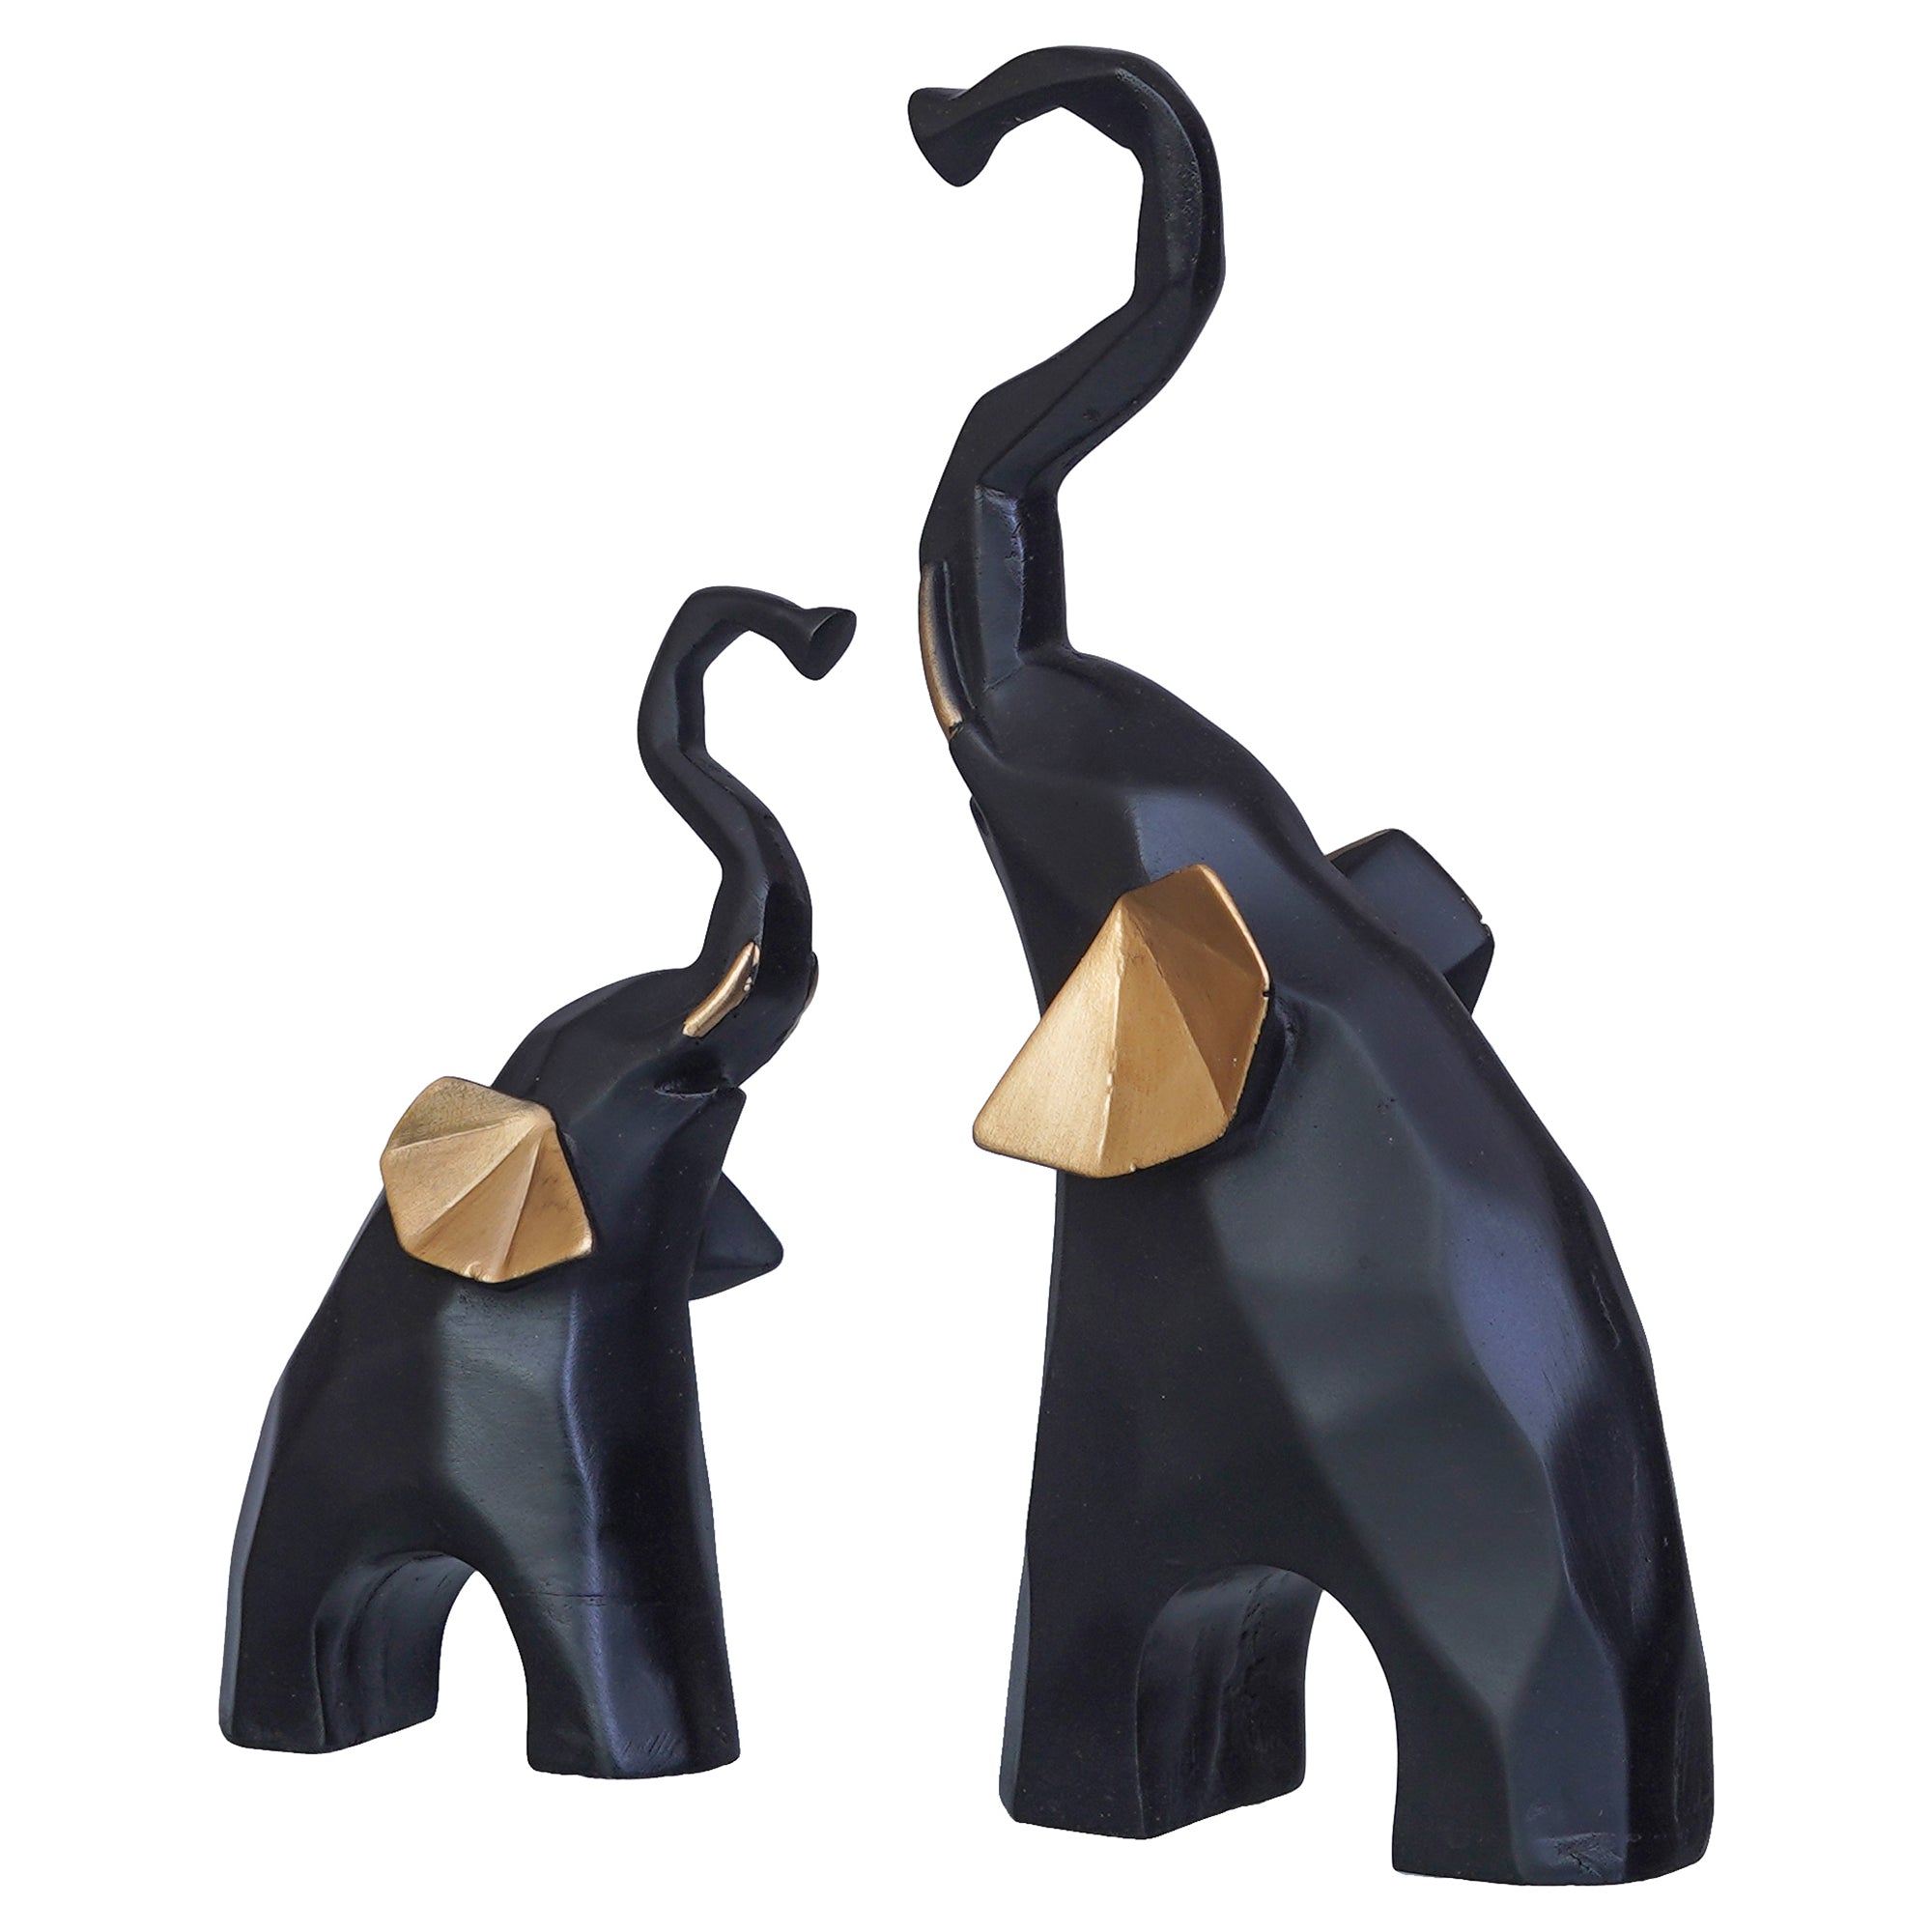 Set of 2 Gold & Black Elephant Statues Decorative Animal Showpieces 7